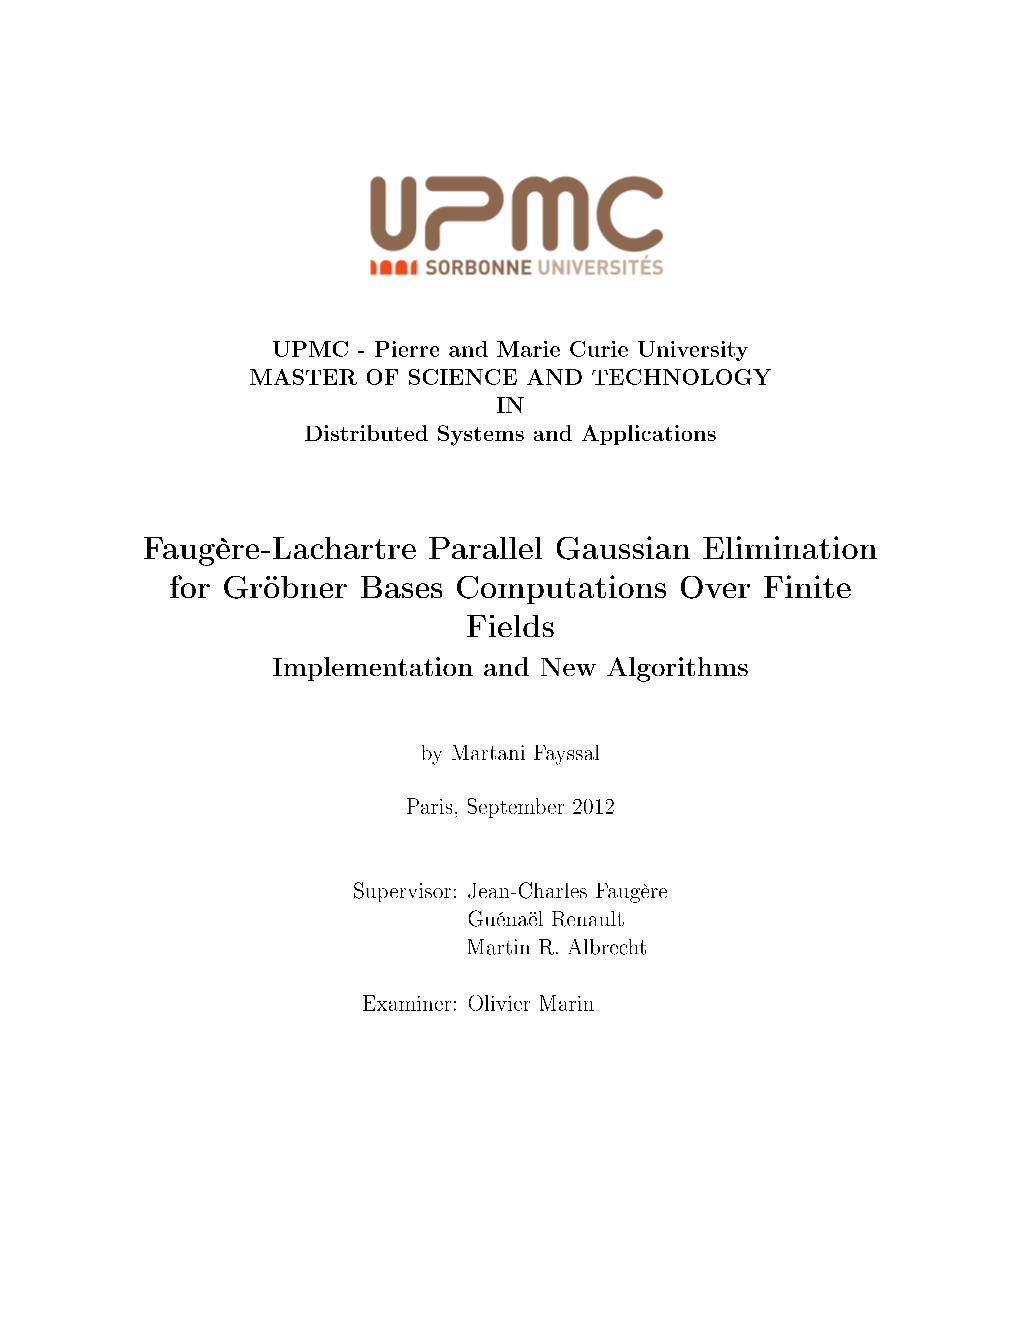 Faugère-Lachartre Parallel Gaussian Elimination for Gröbner Bases Computations Over Finite Fields Implementation and New Algorithms